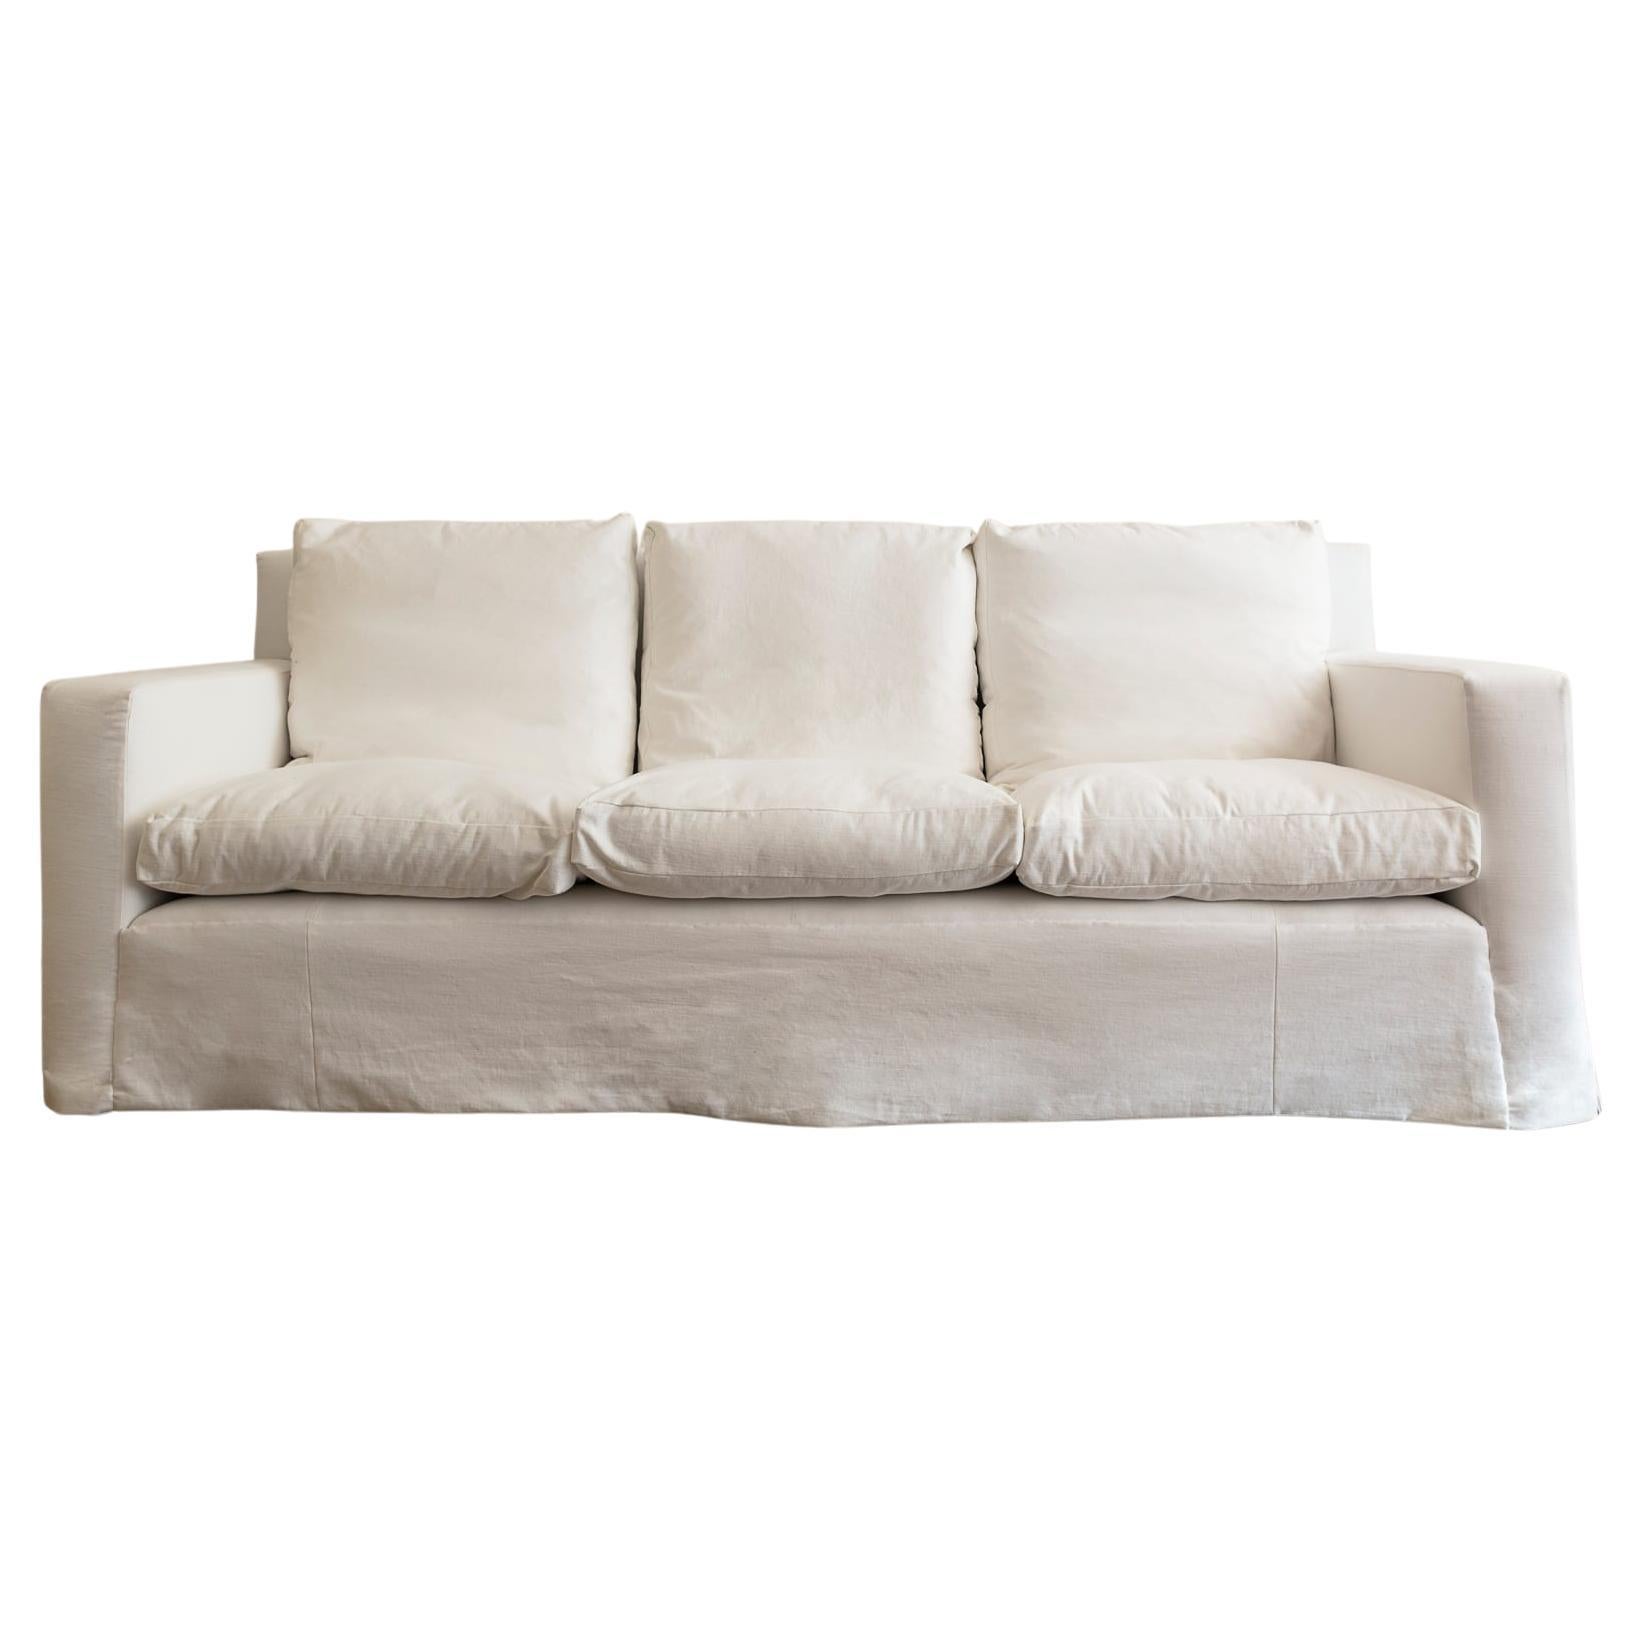 Templeton Sofa For Sale